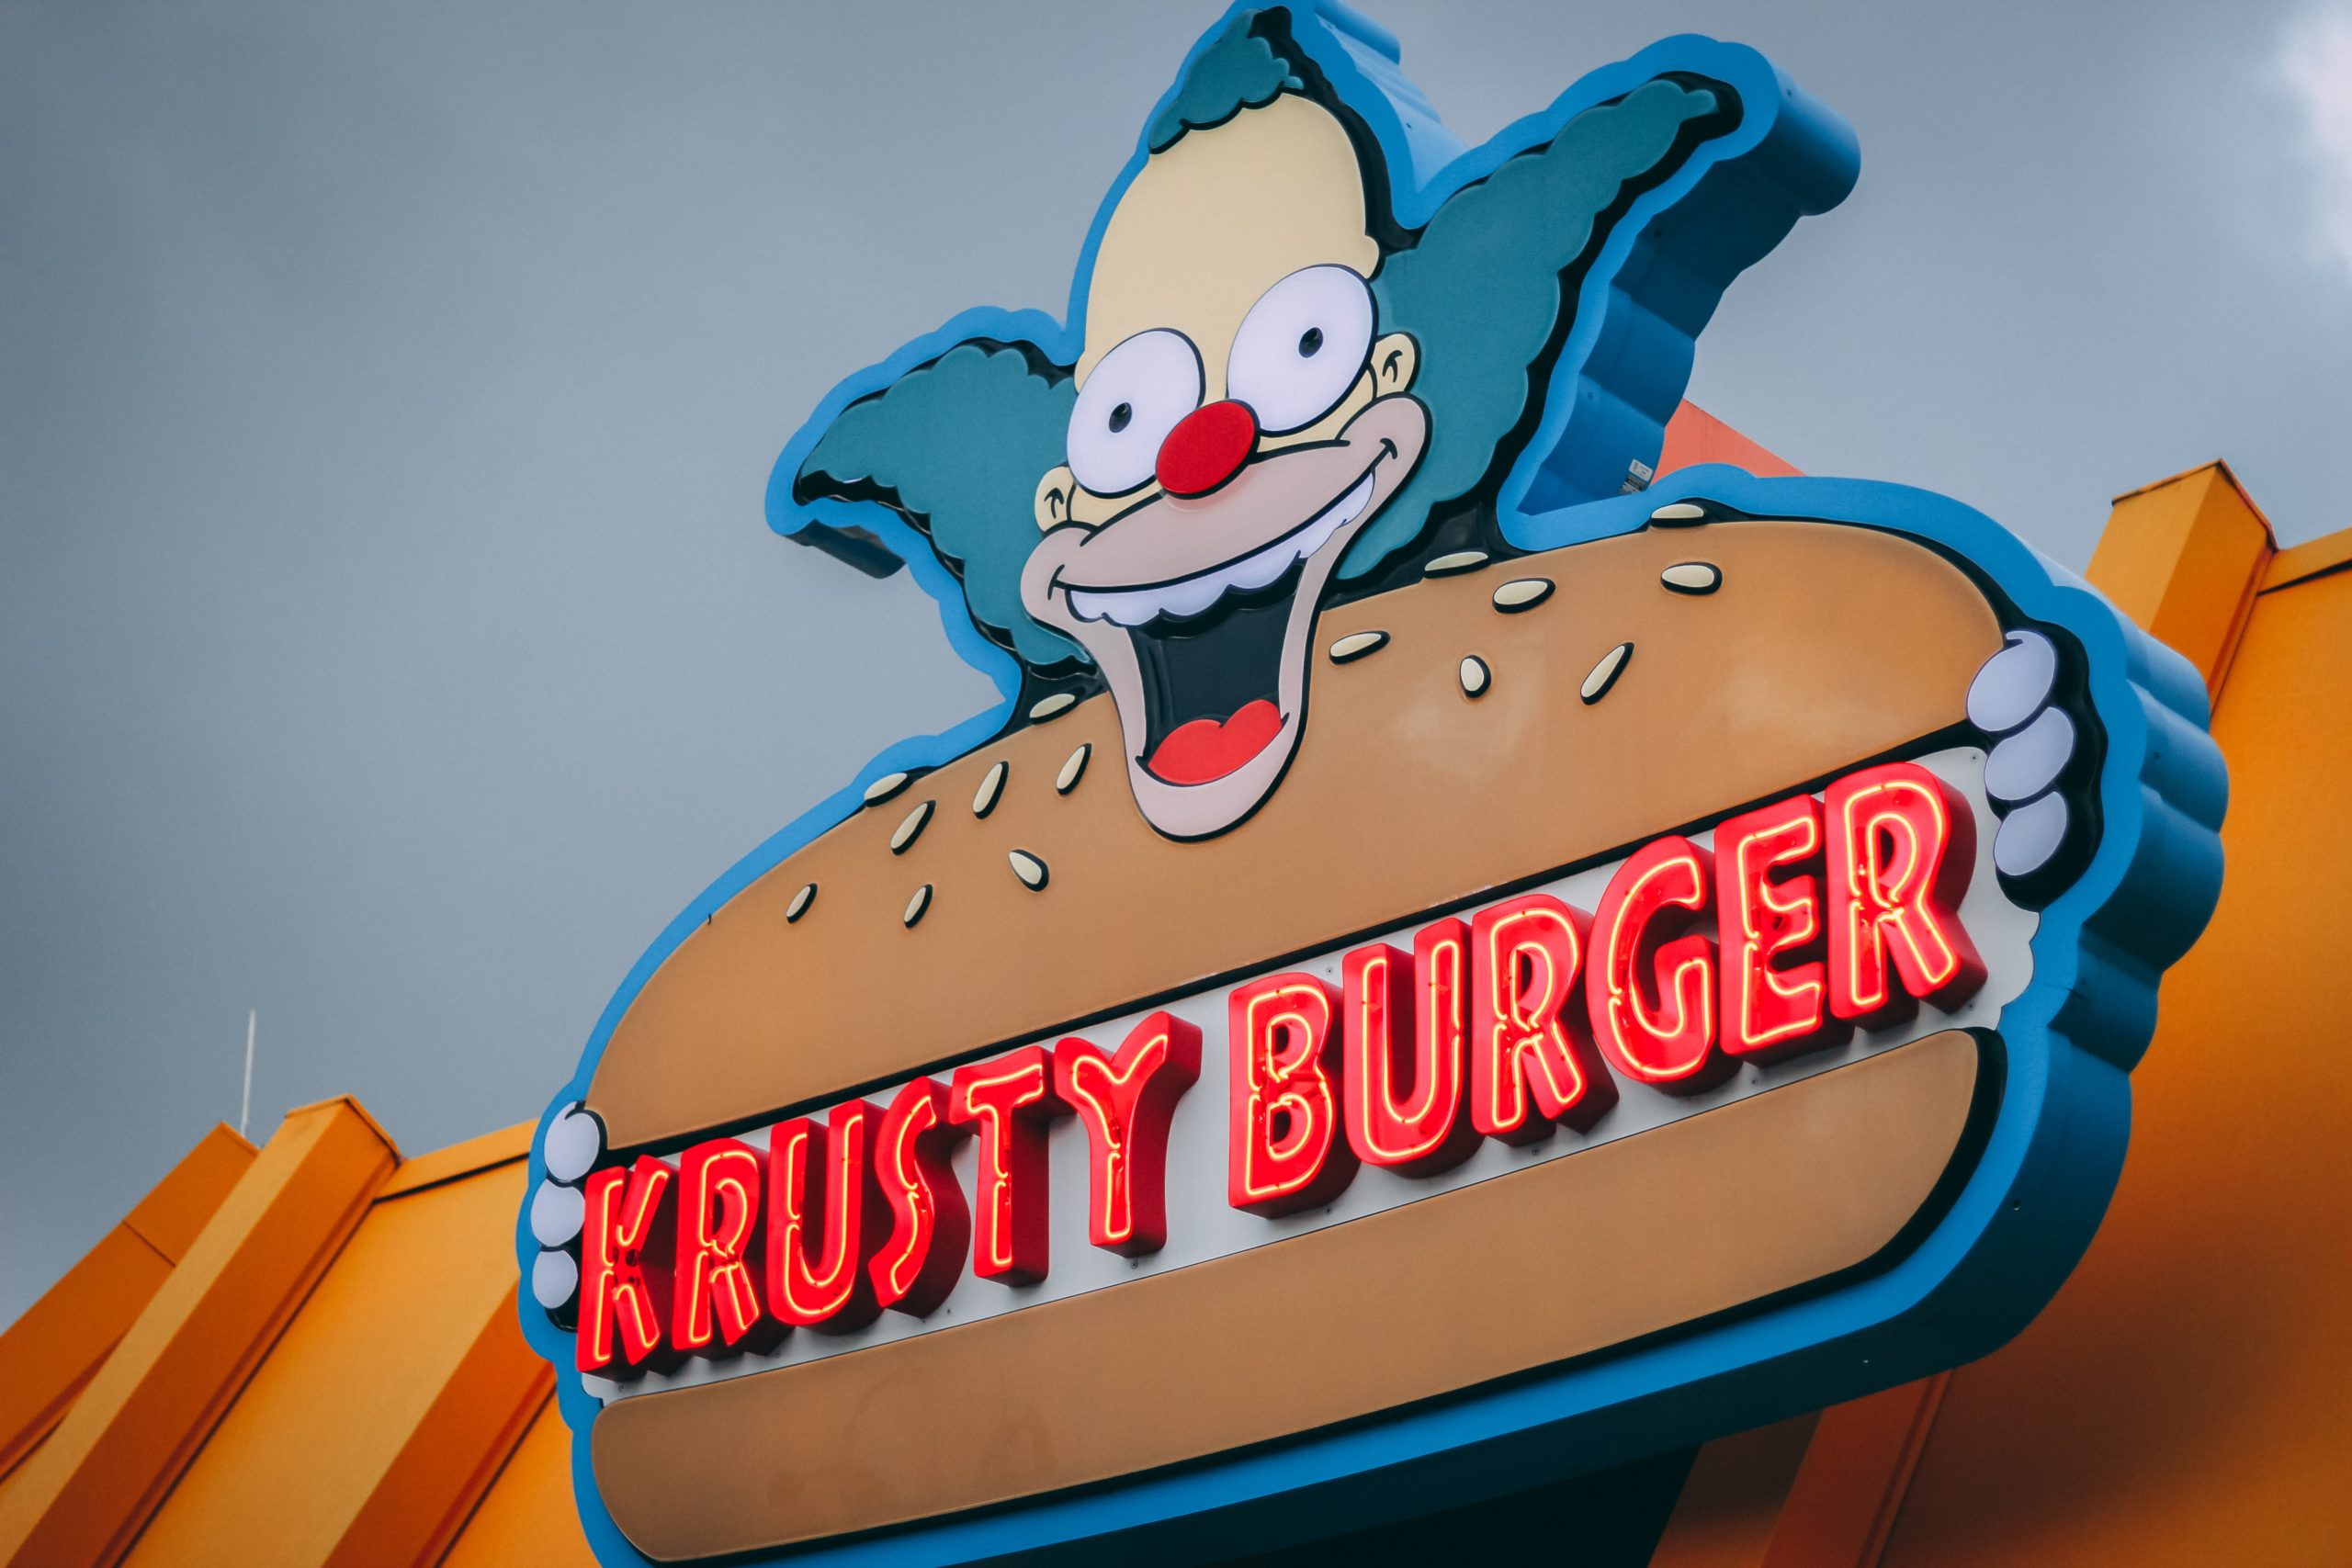 Krusty Burger logo of Krusty the Clown with neon lights